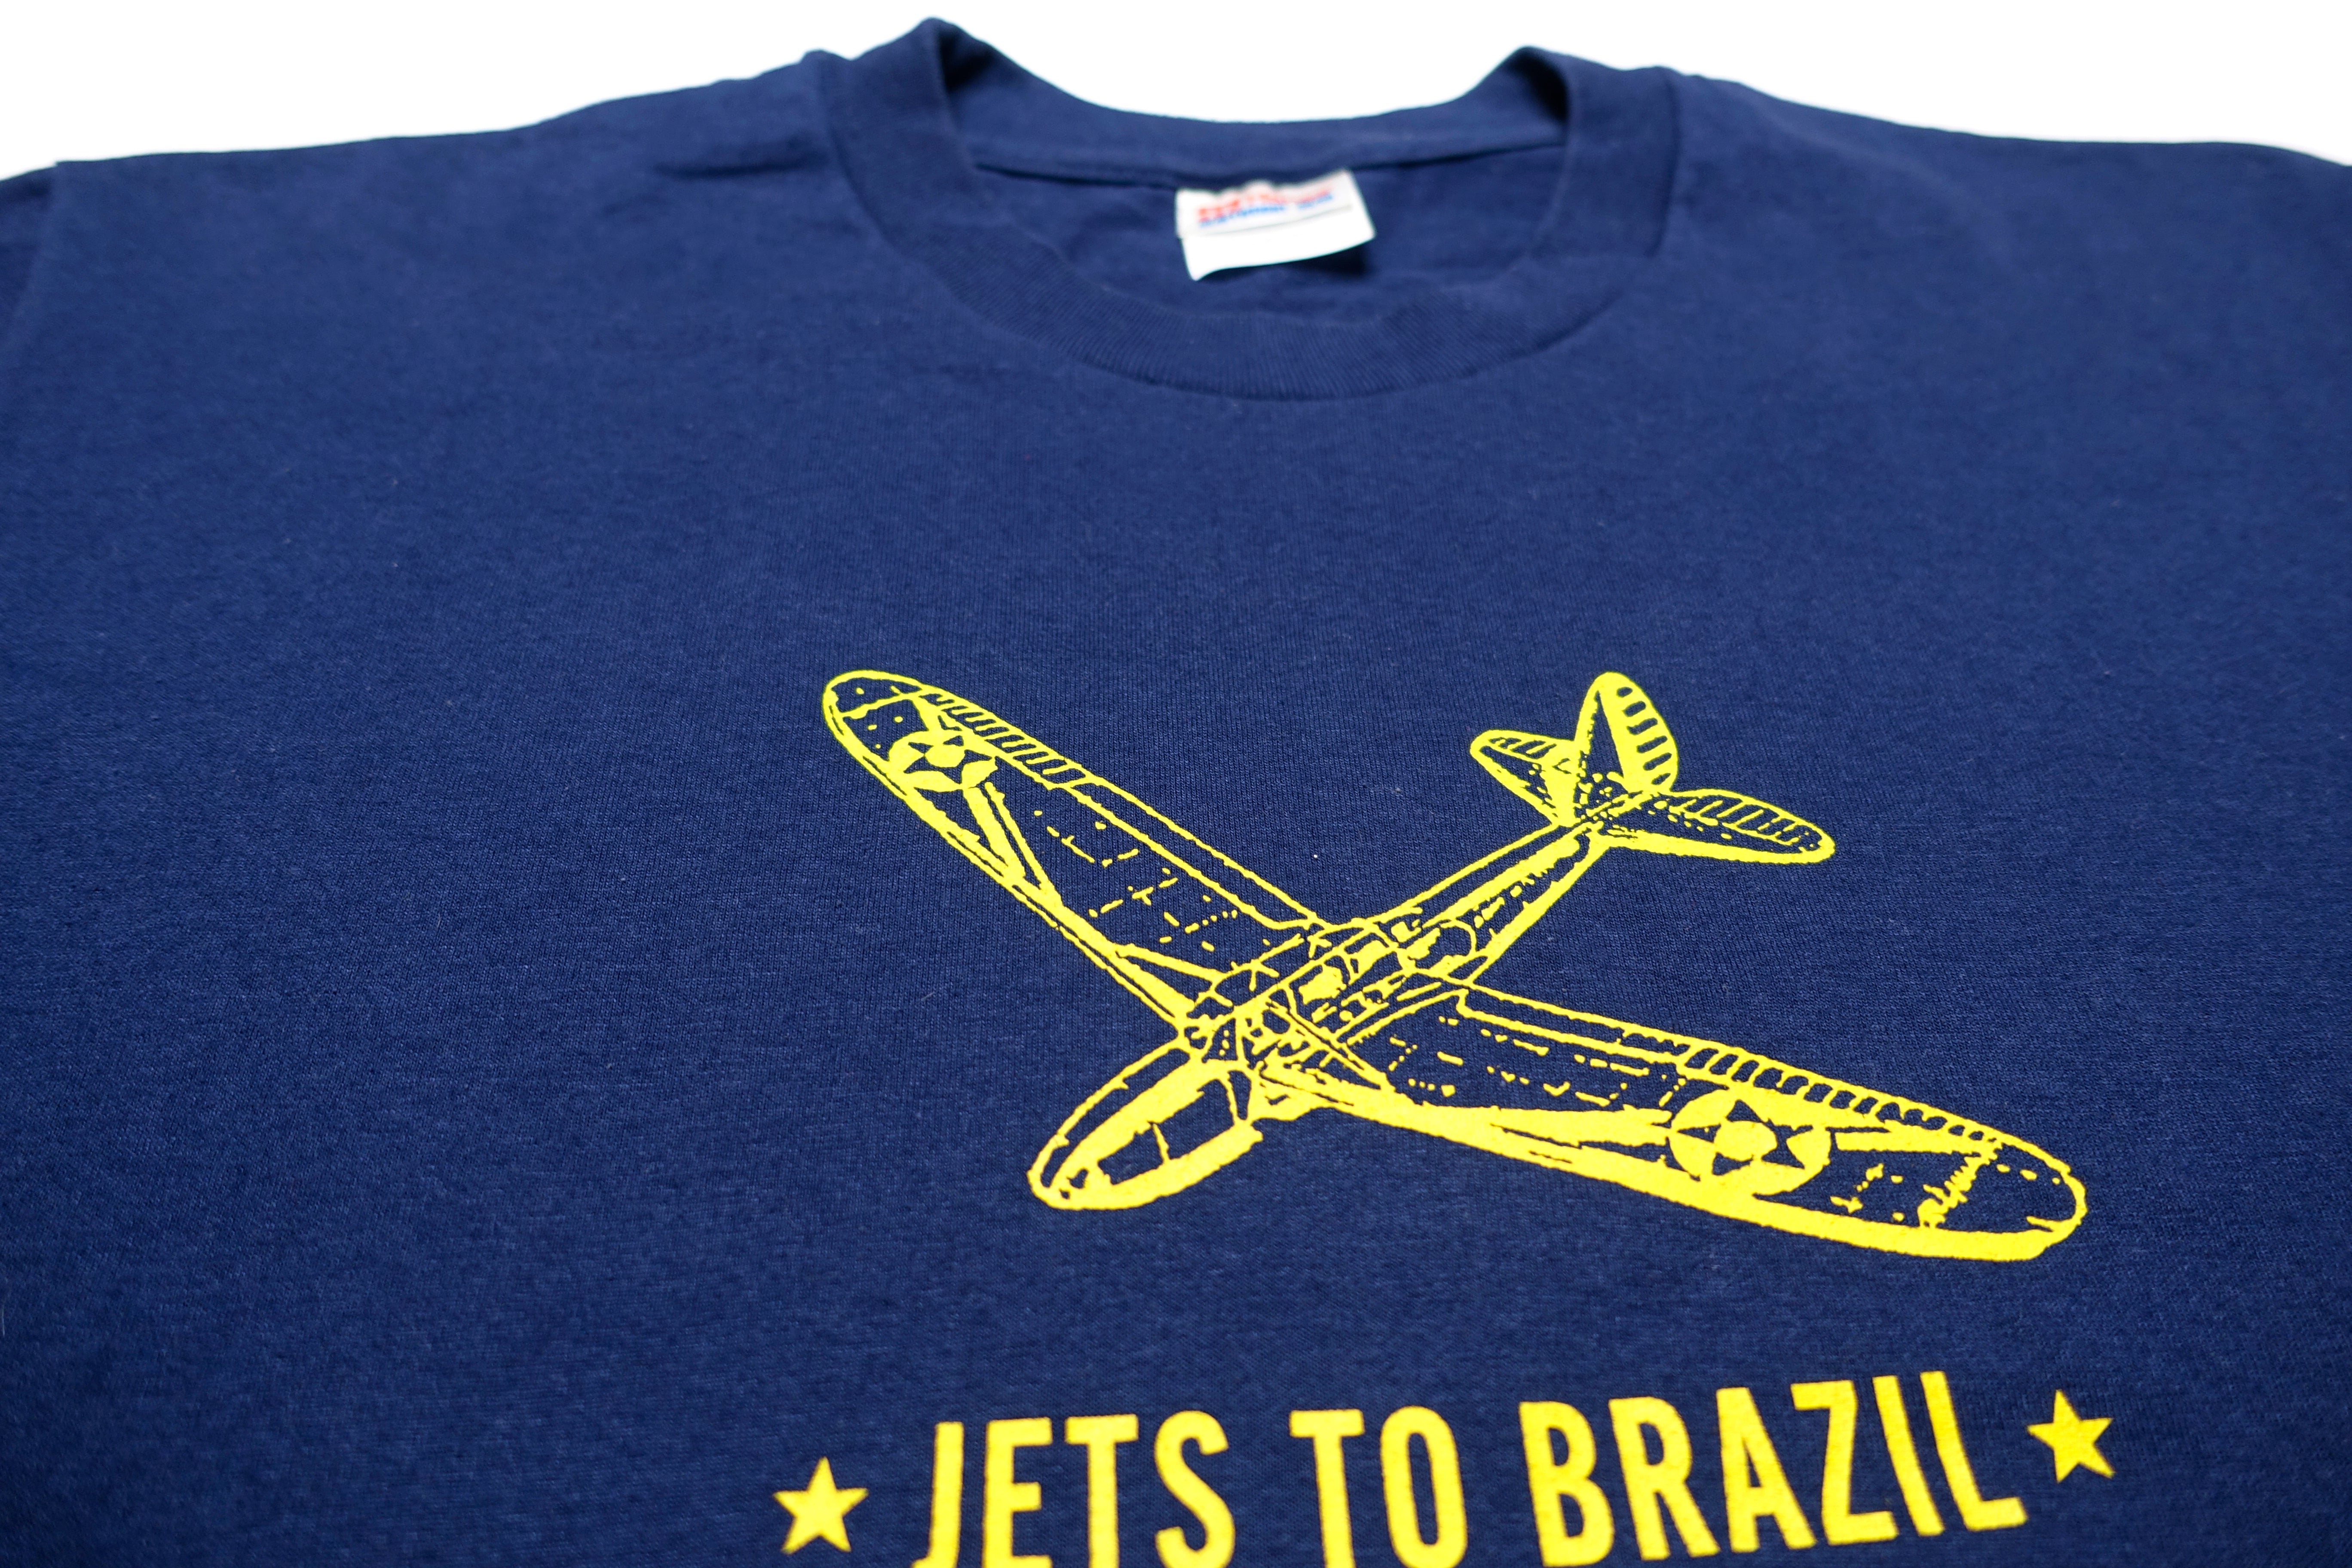 Jets To Brazil - Glider Tour Shirt Size Large (Navy)